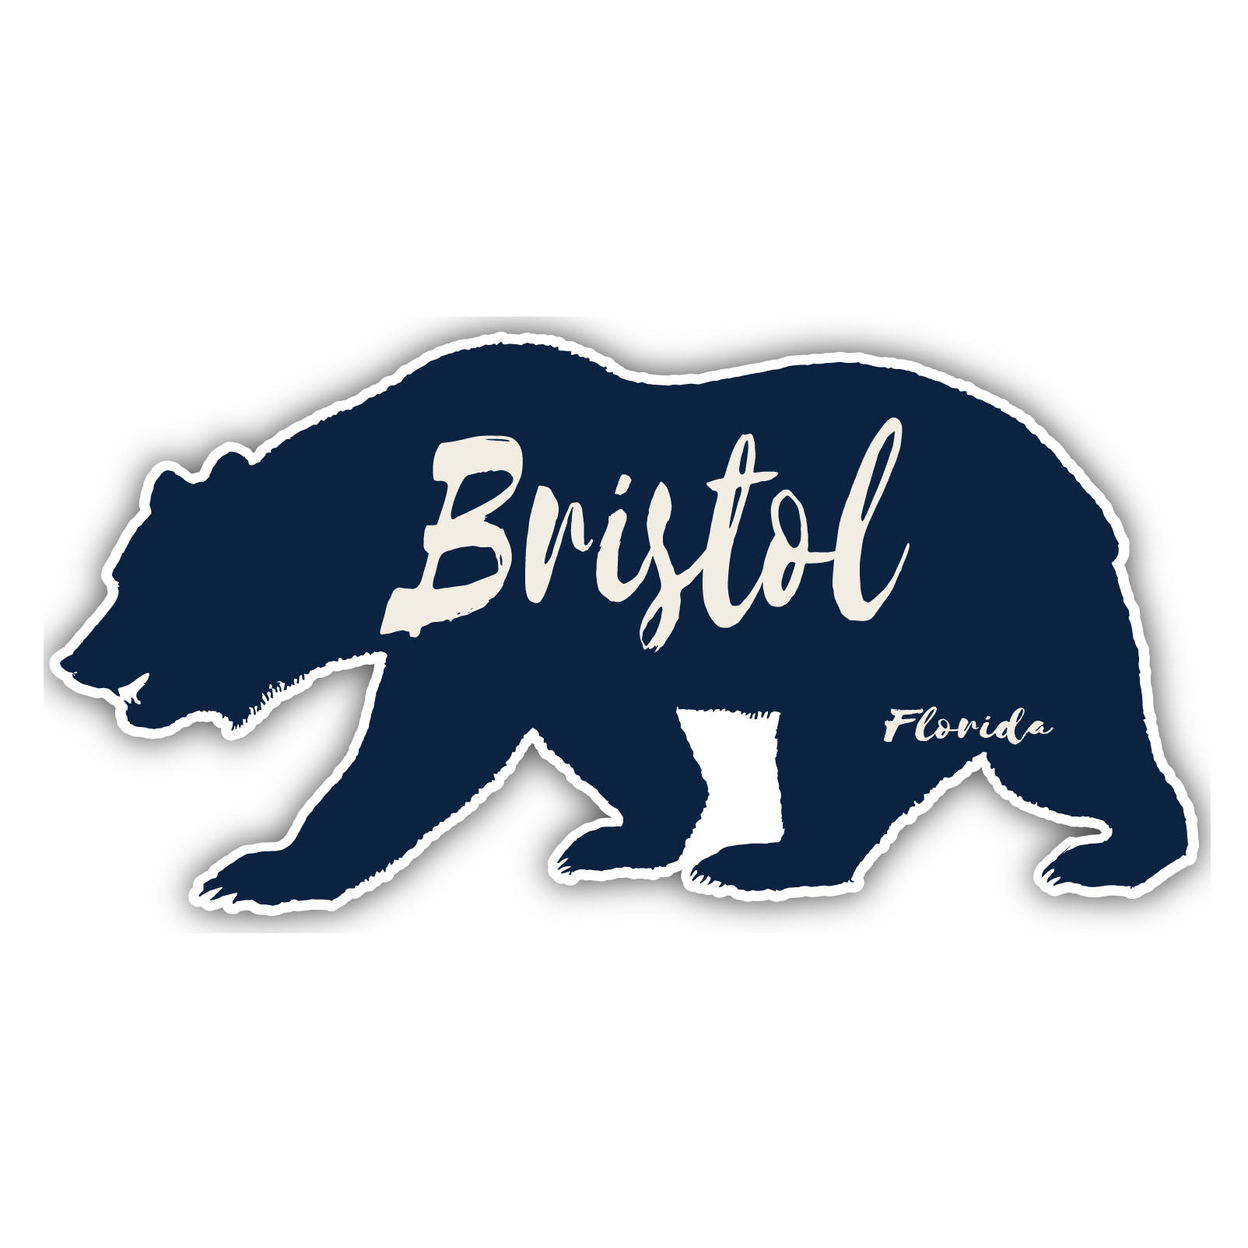 Bristol Florida Souvenir Decorative Stickers (Choose Theme And Size) - 4-Pack, 4-Inch, Bear